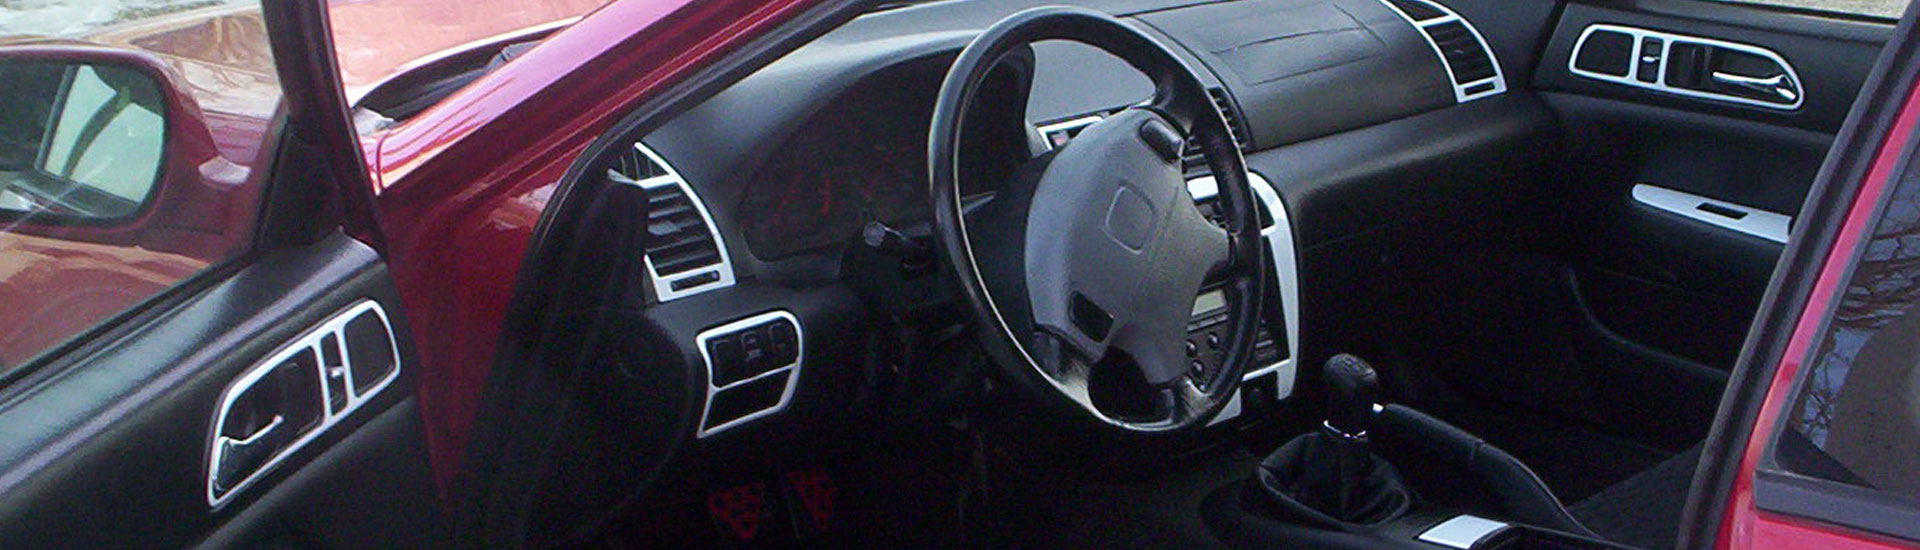 Honda Prelude Dash Kits